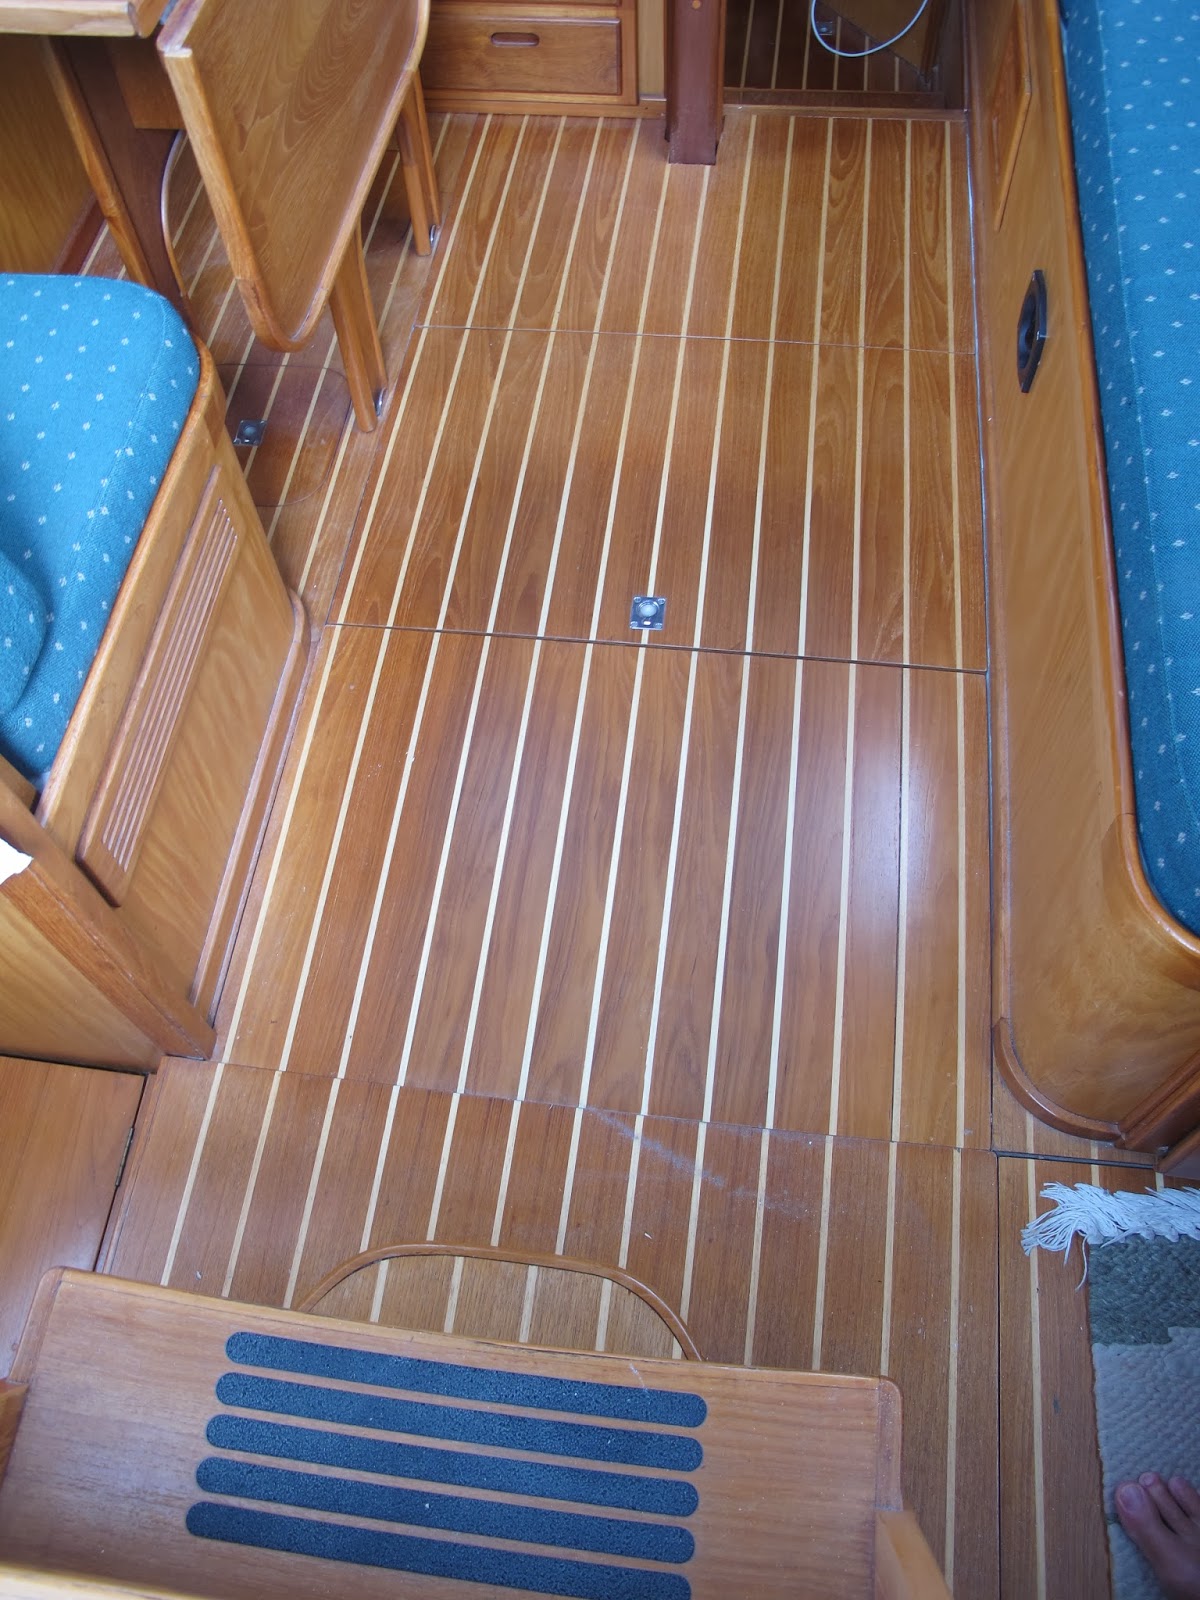 CKD Boats - Roy Mc Bride: Teak and Ash boat flooring